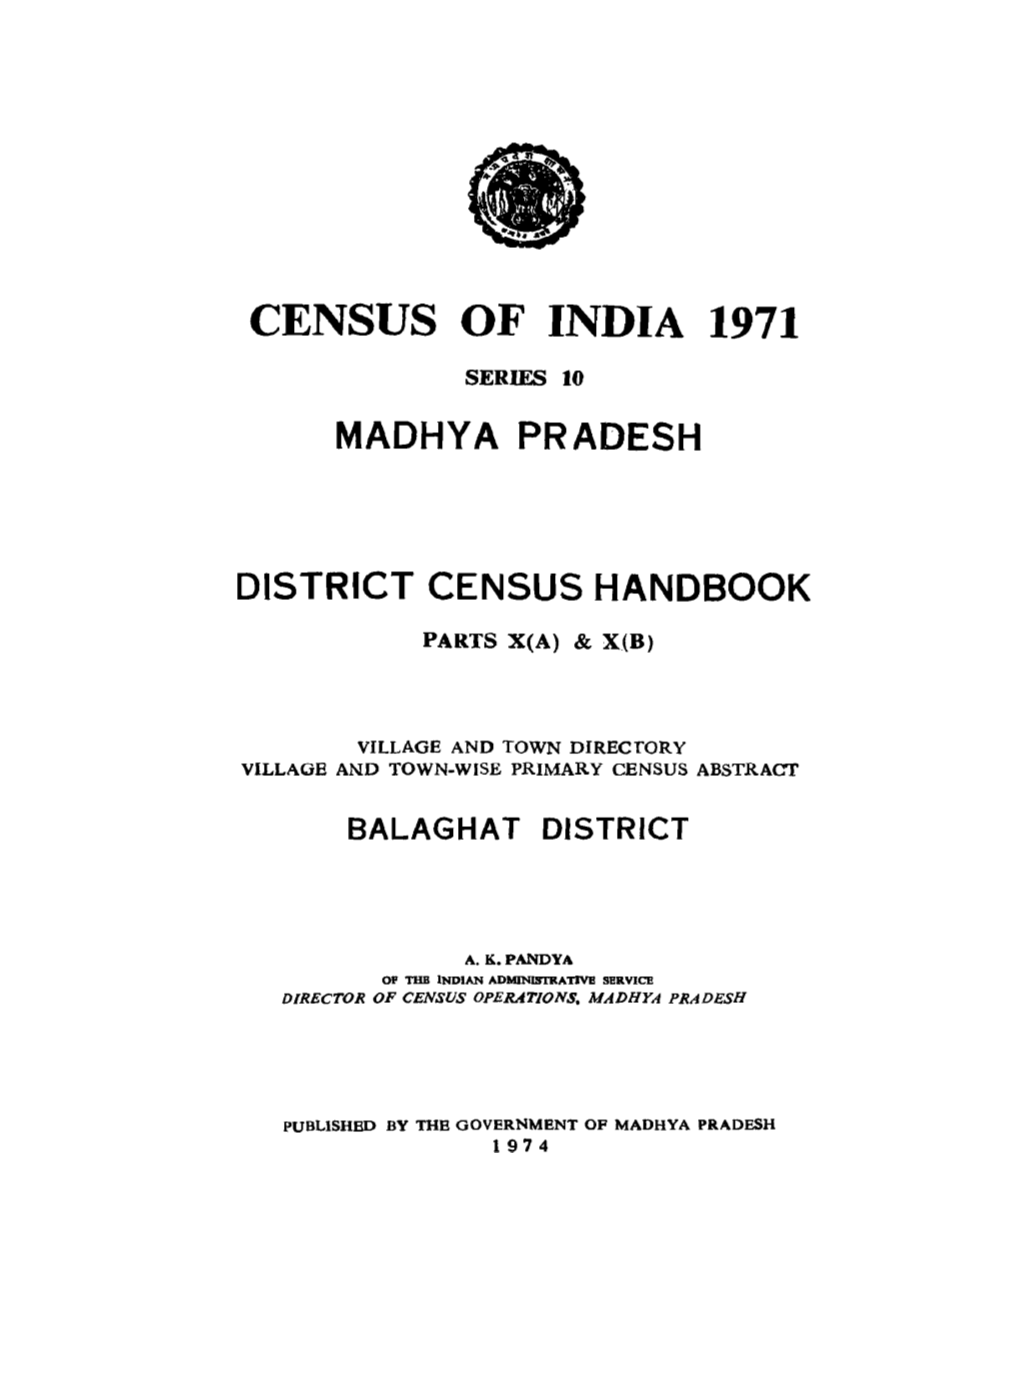 District Census Handbook, Balaghat, Parts X